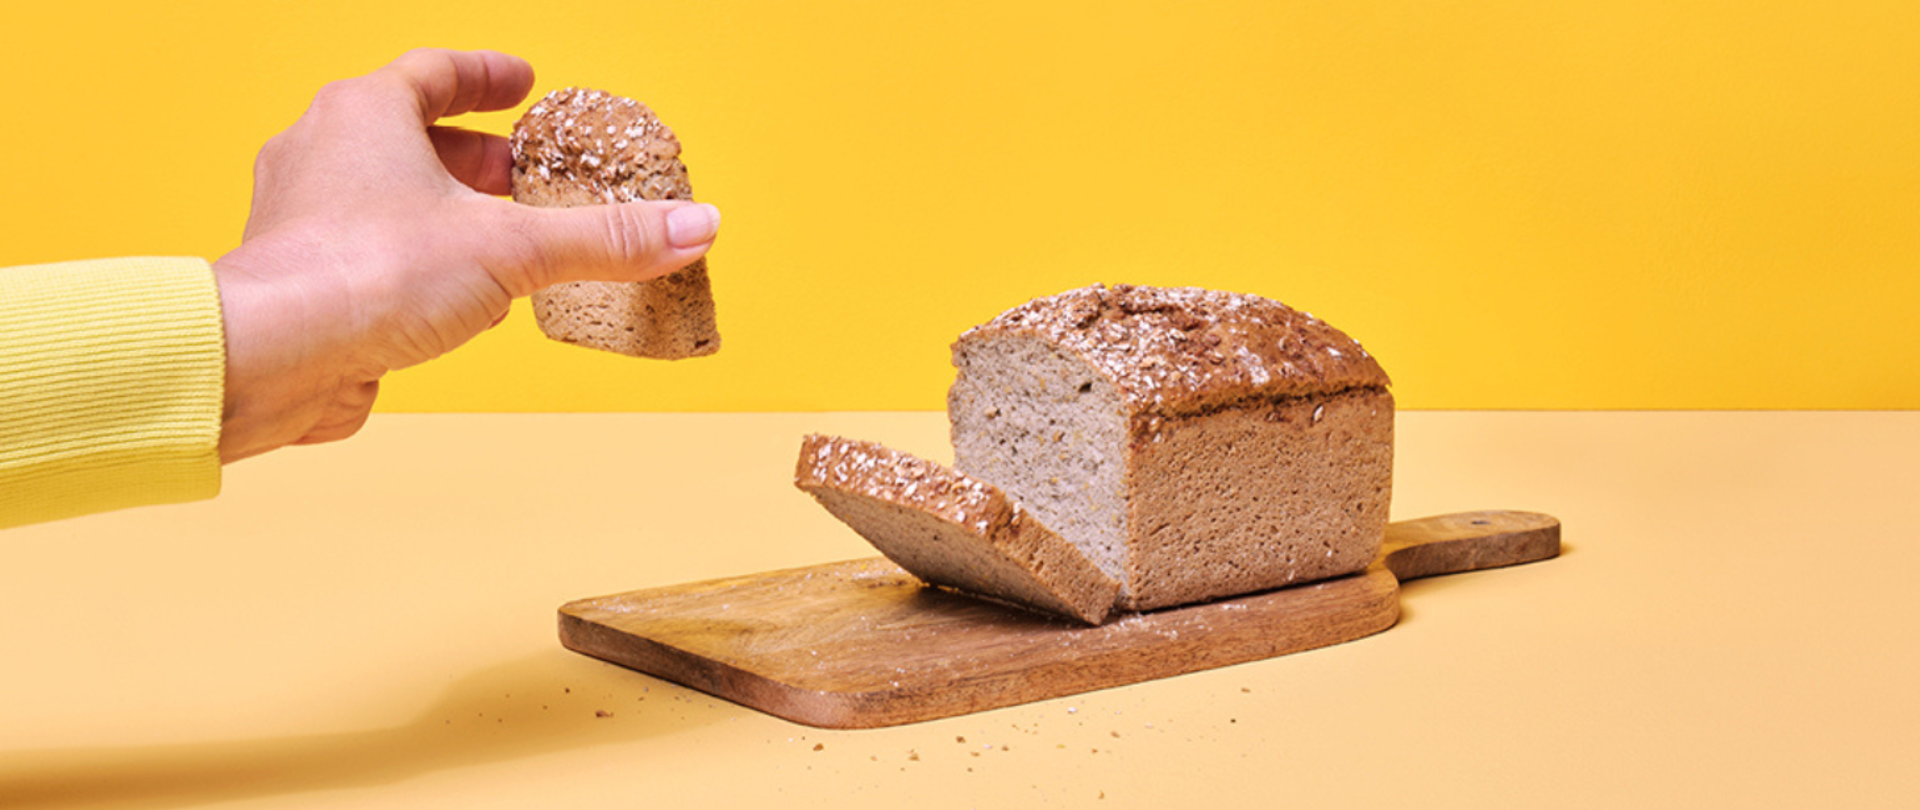 Bochenek chleba na desce do krojenia, żółte tło